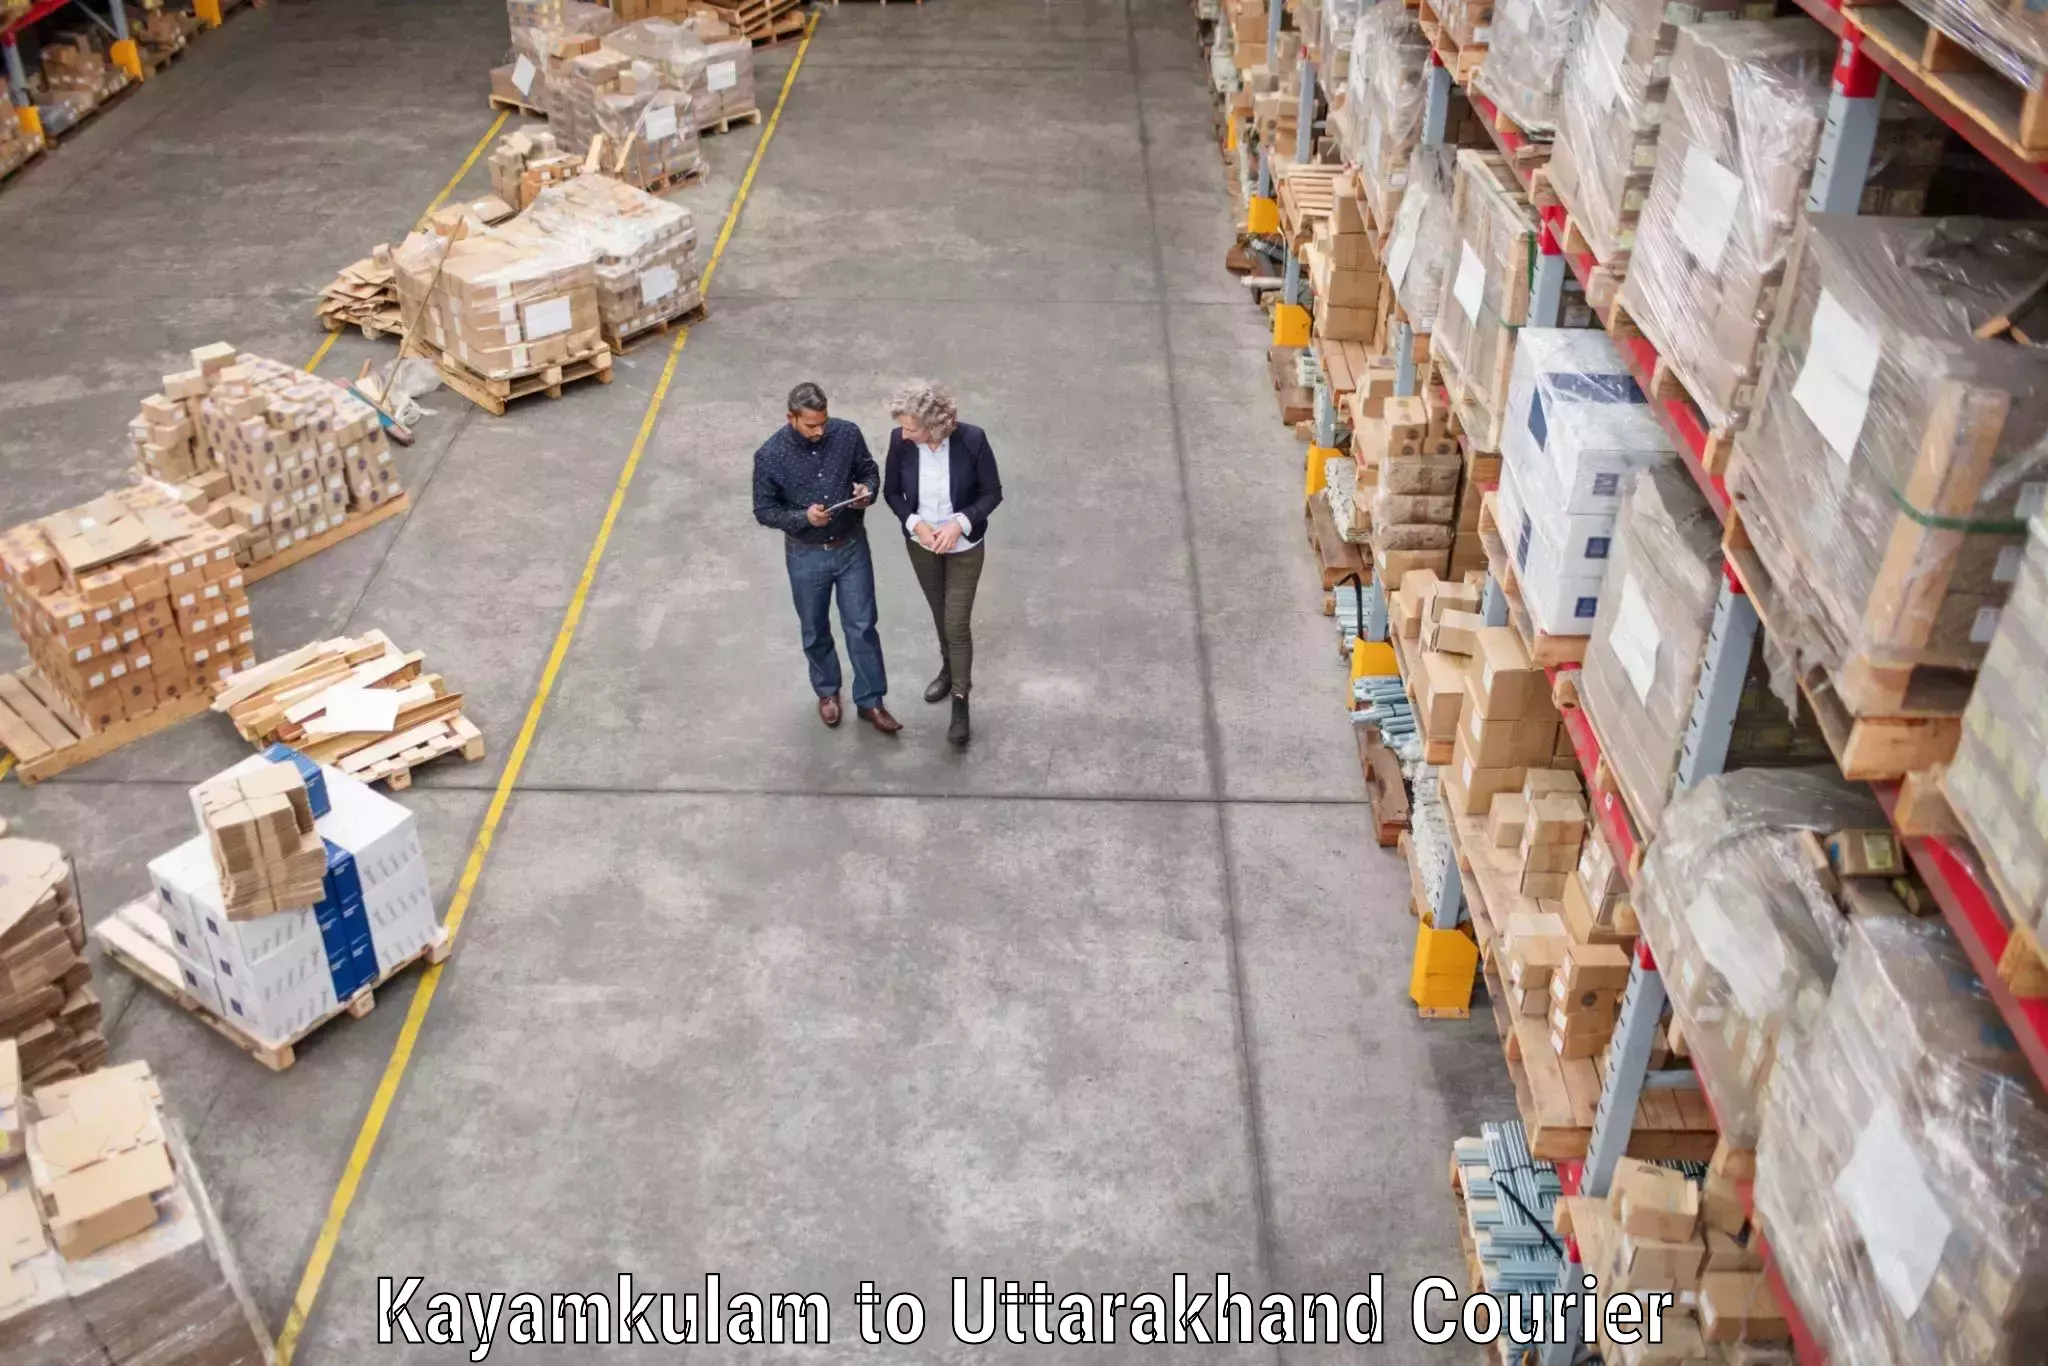 Professional moving company Kayamkulam to Roorkee